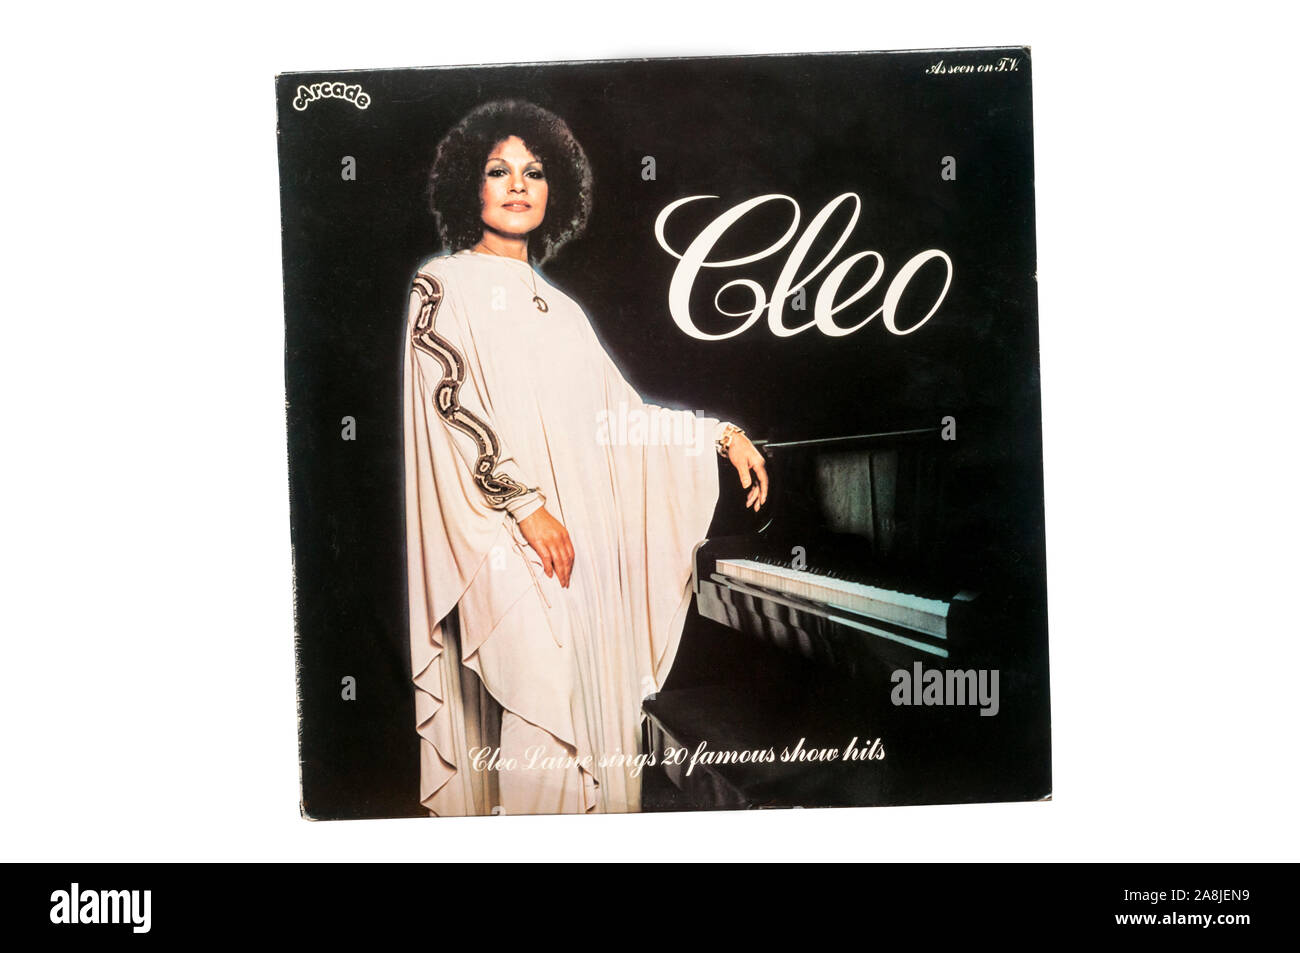 Cleo. Cleo Laine canta 20 famosa Mostra Hits. Rilasciato nel 1978. Foto Stock